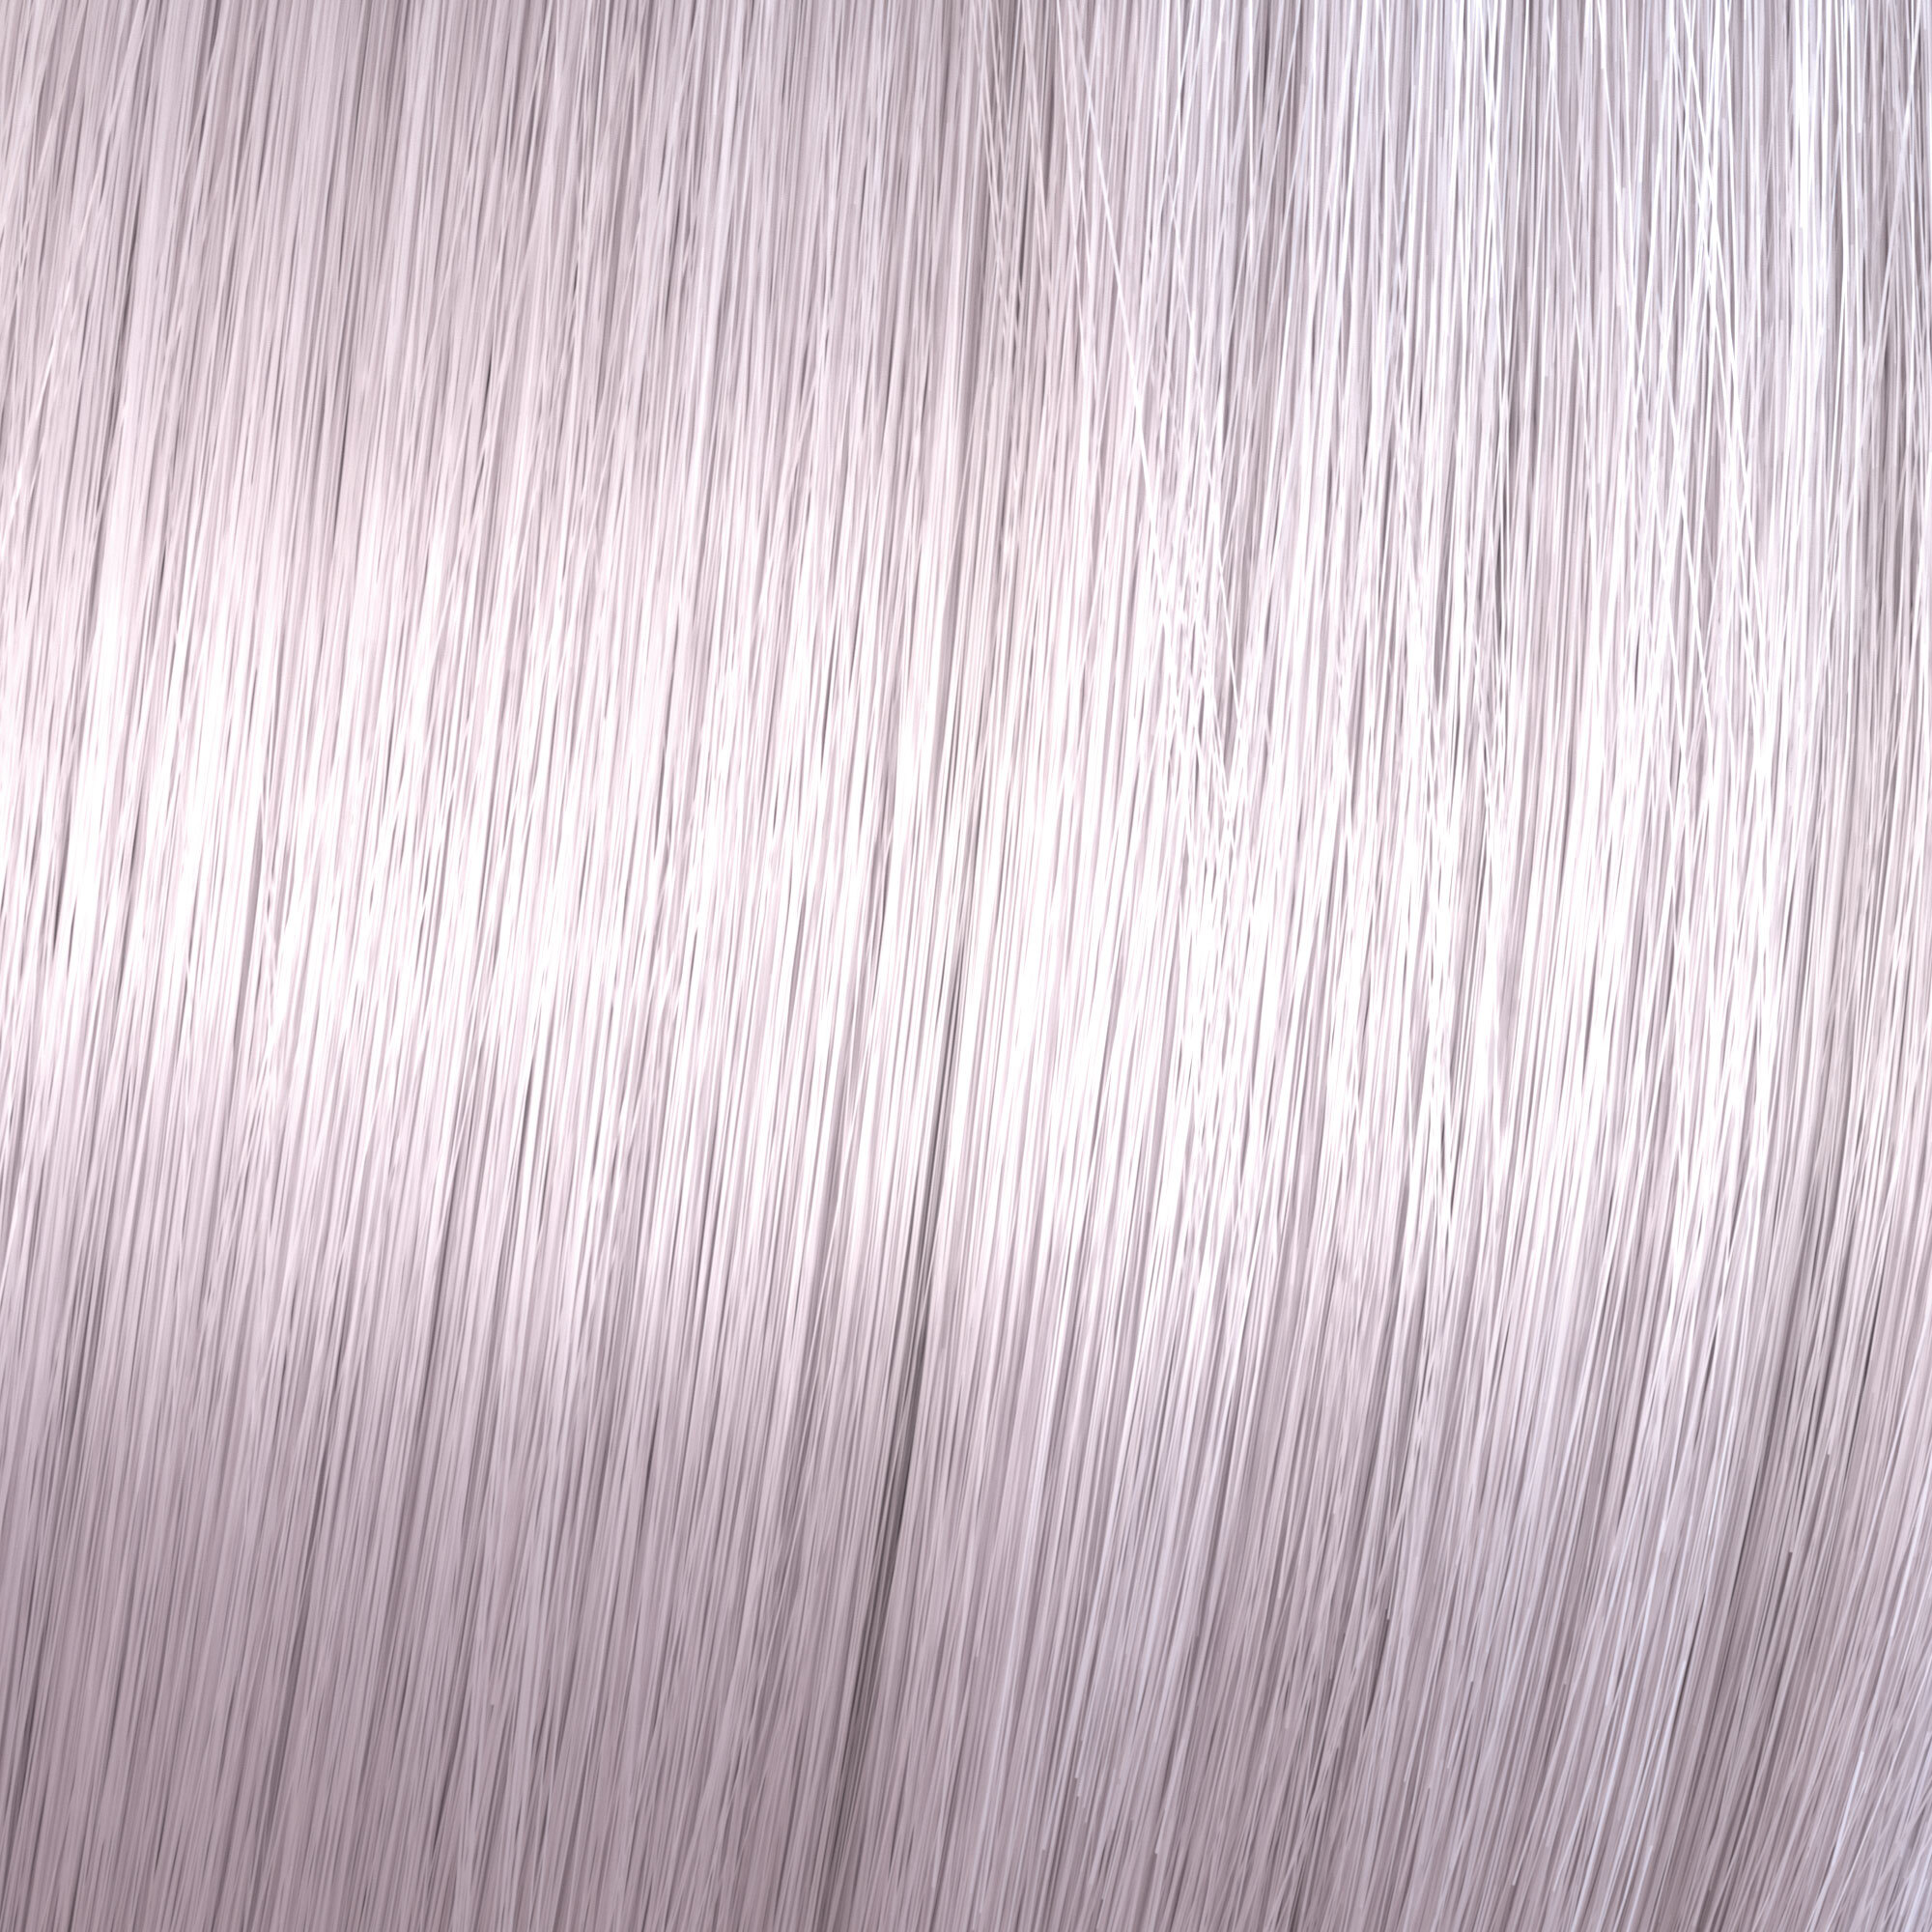 Wella Shinefinity Color Glaze - 09/61 Very Light Blonde Violet Ash